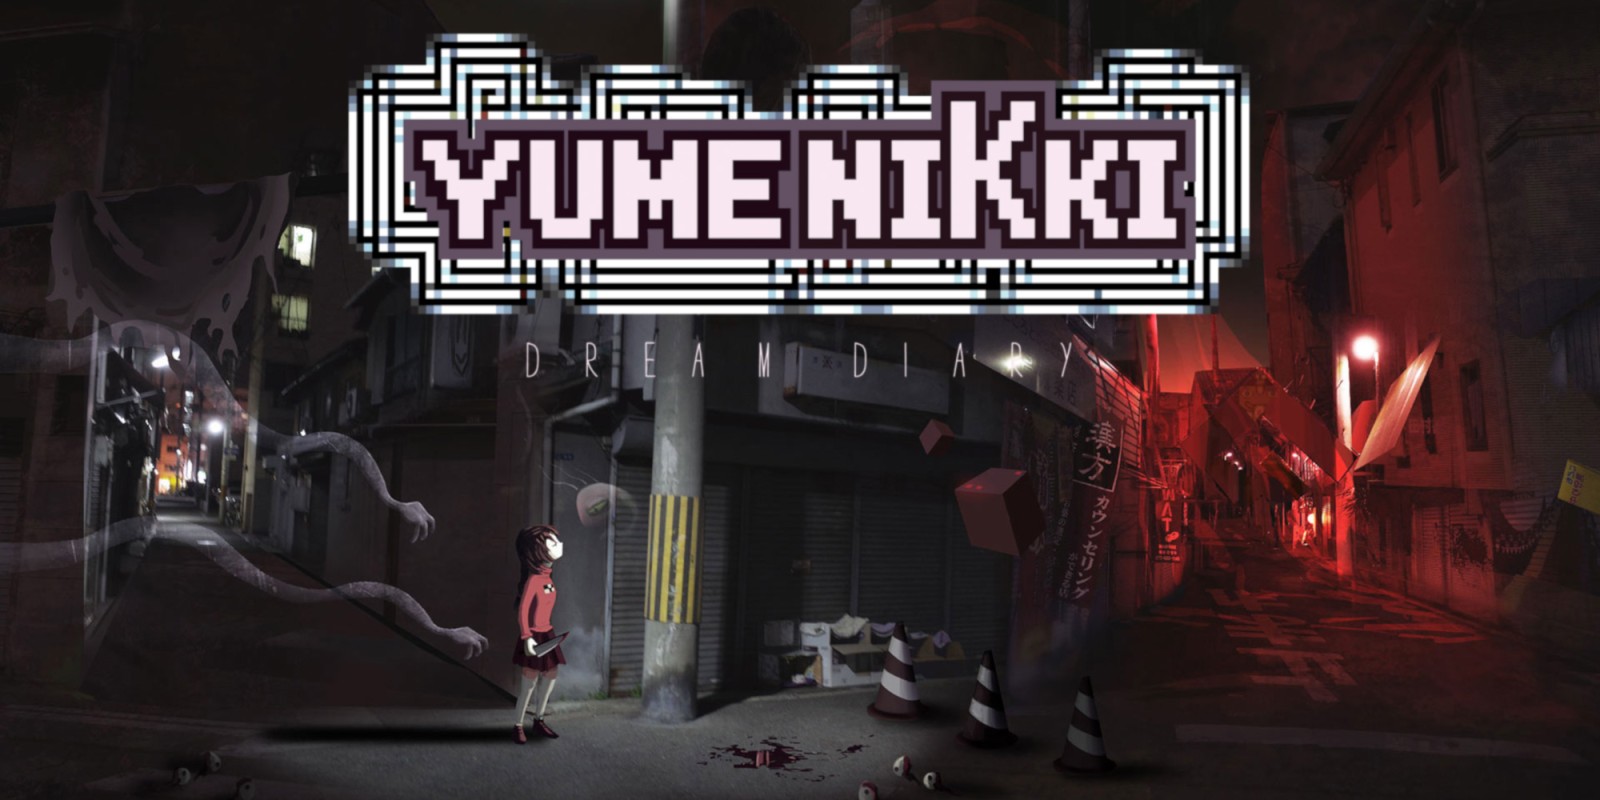 yume nikki controls stopped working